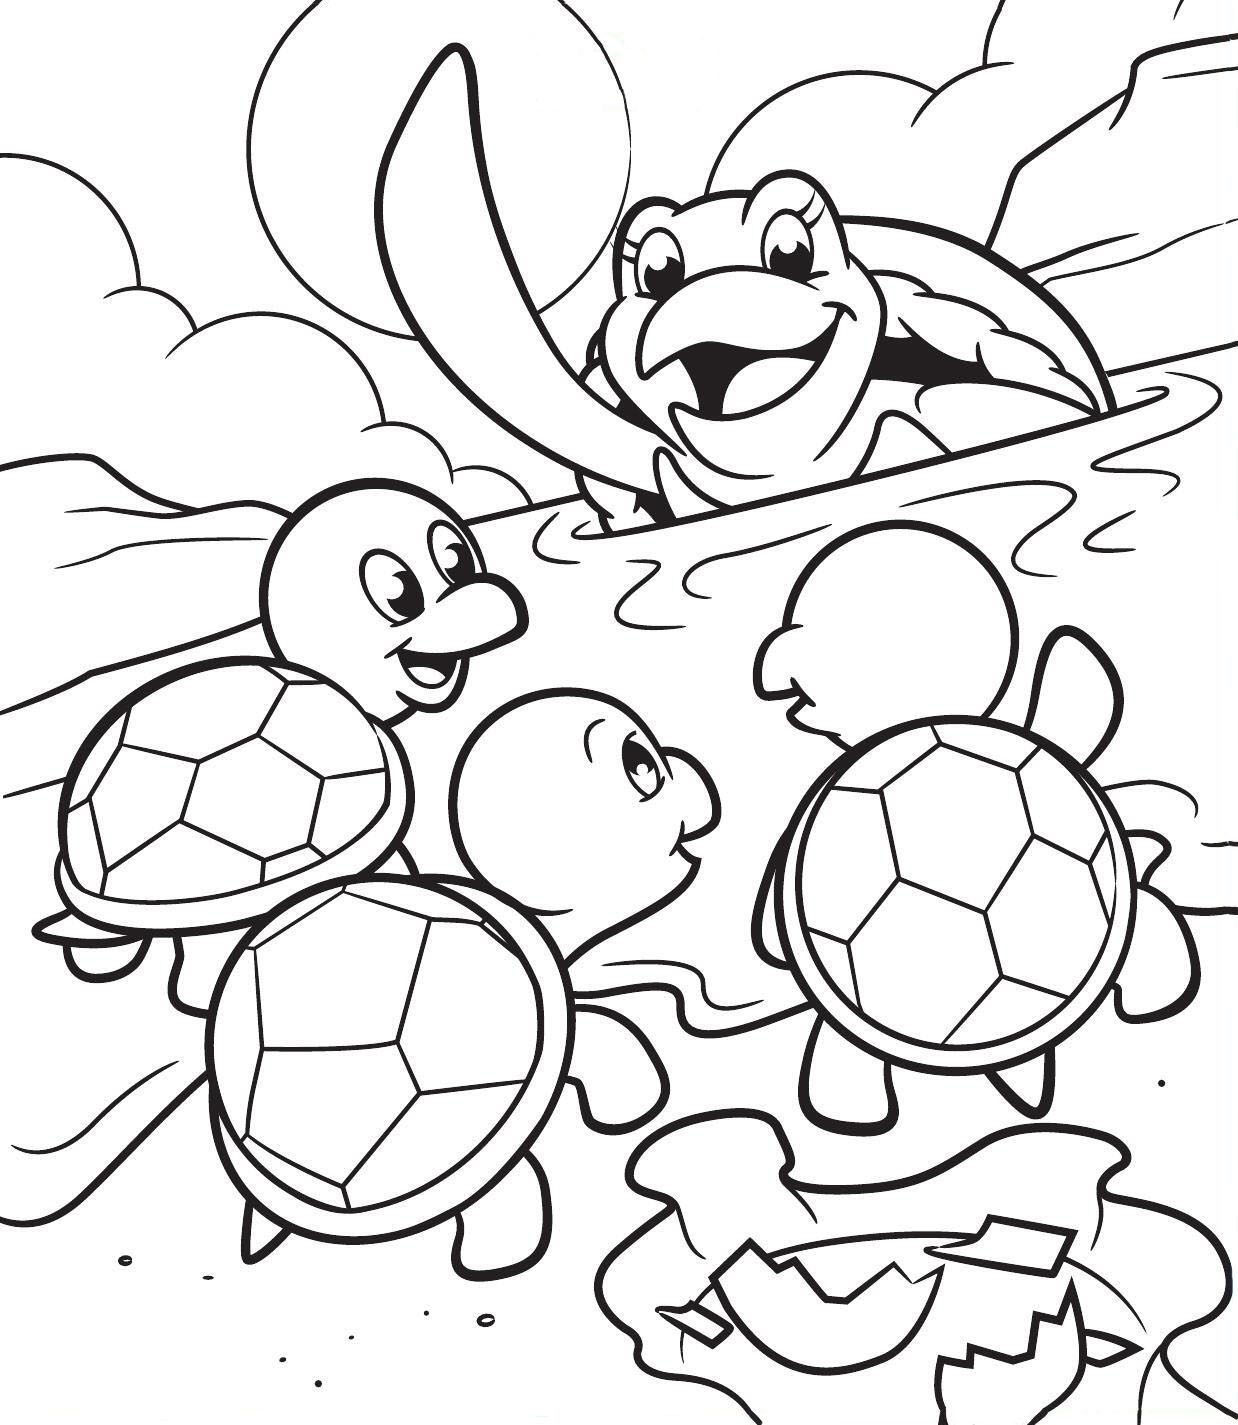 Turtle Family